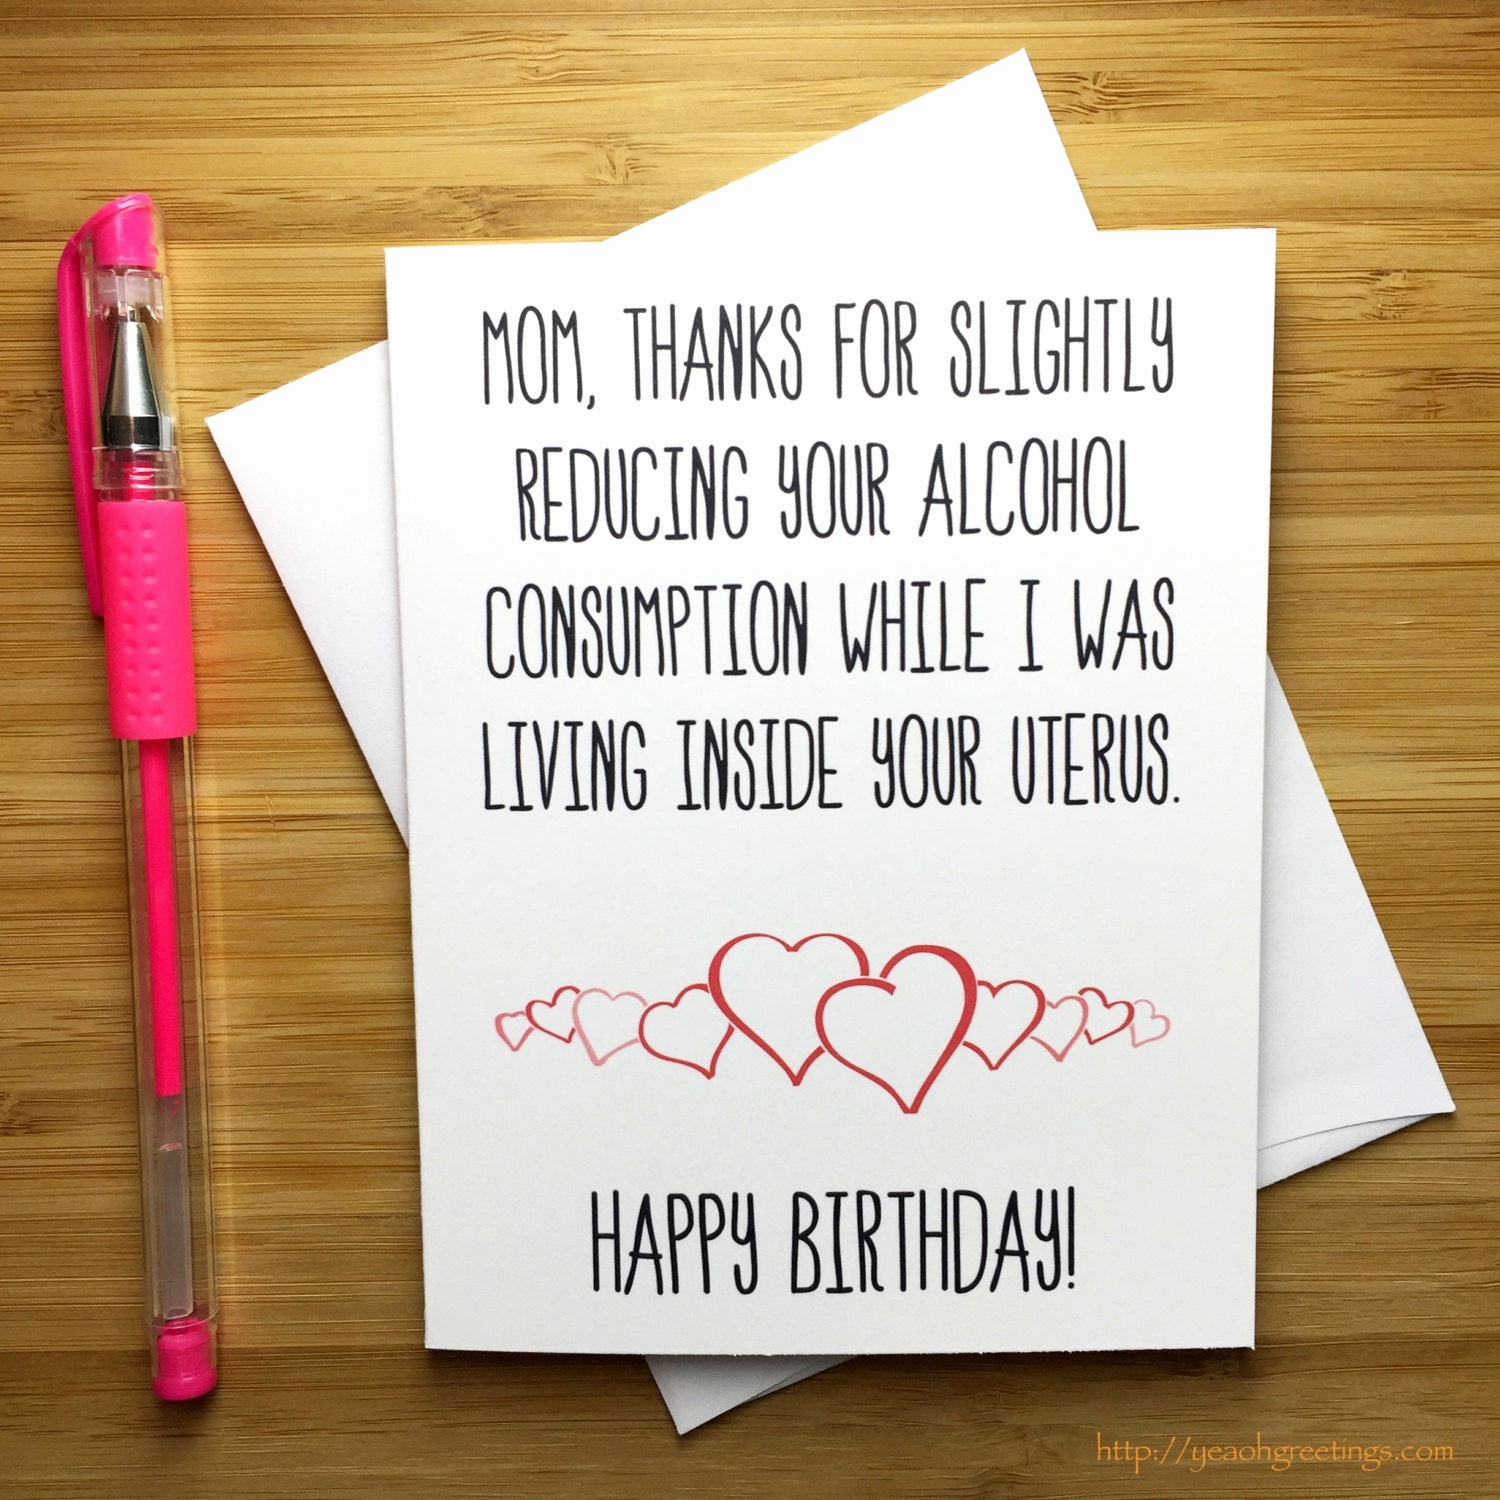 Creative Ideas For A Birthday Card Greeting Card Ideas For Best Friend Birthday Writing Creative